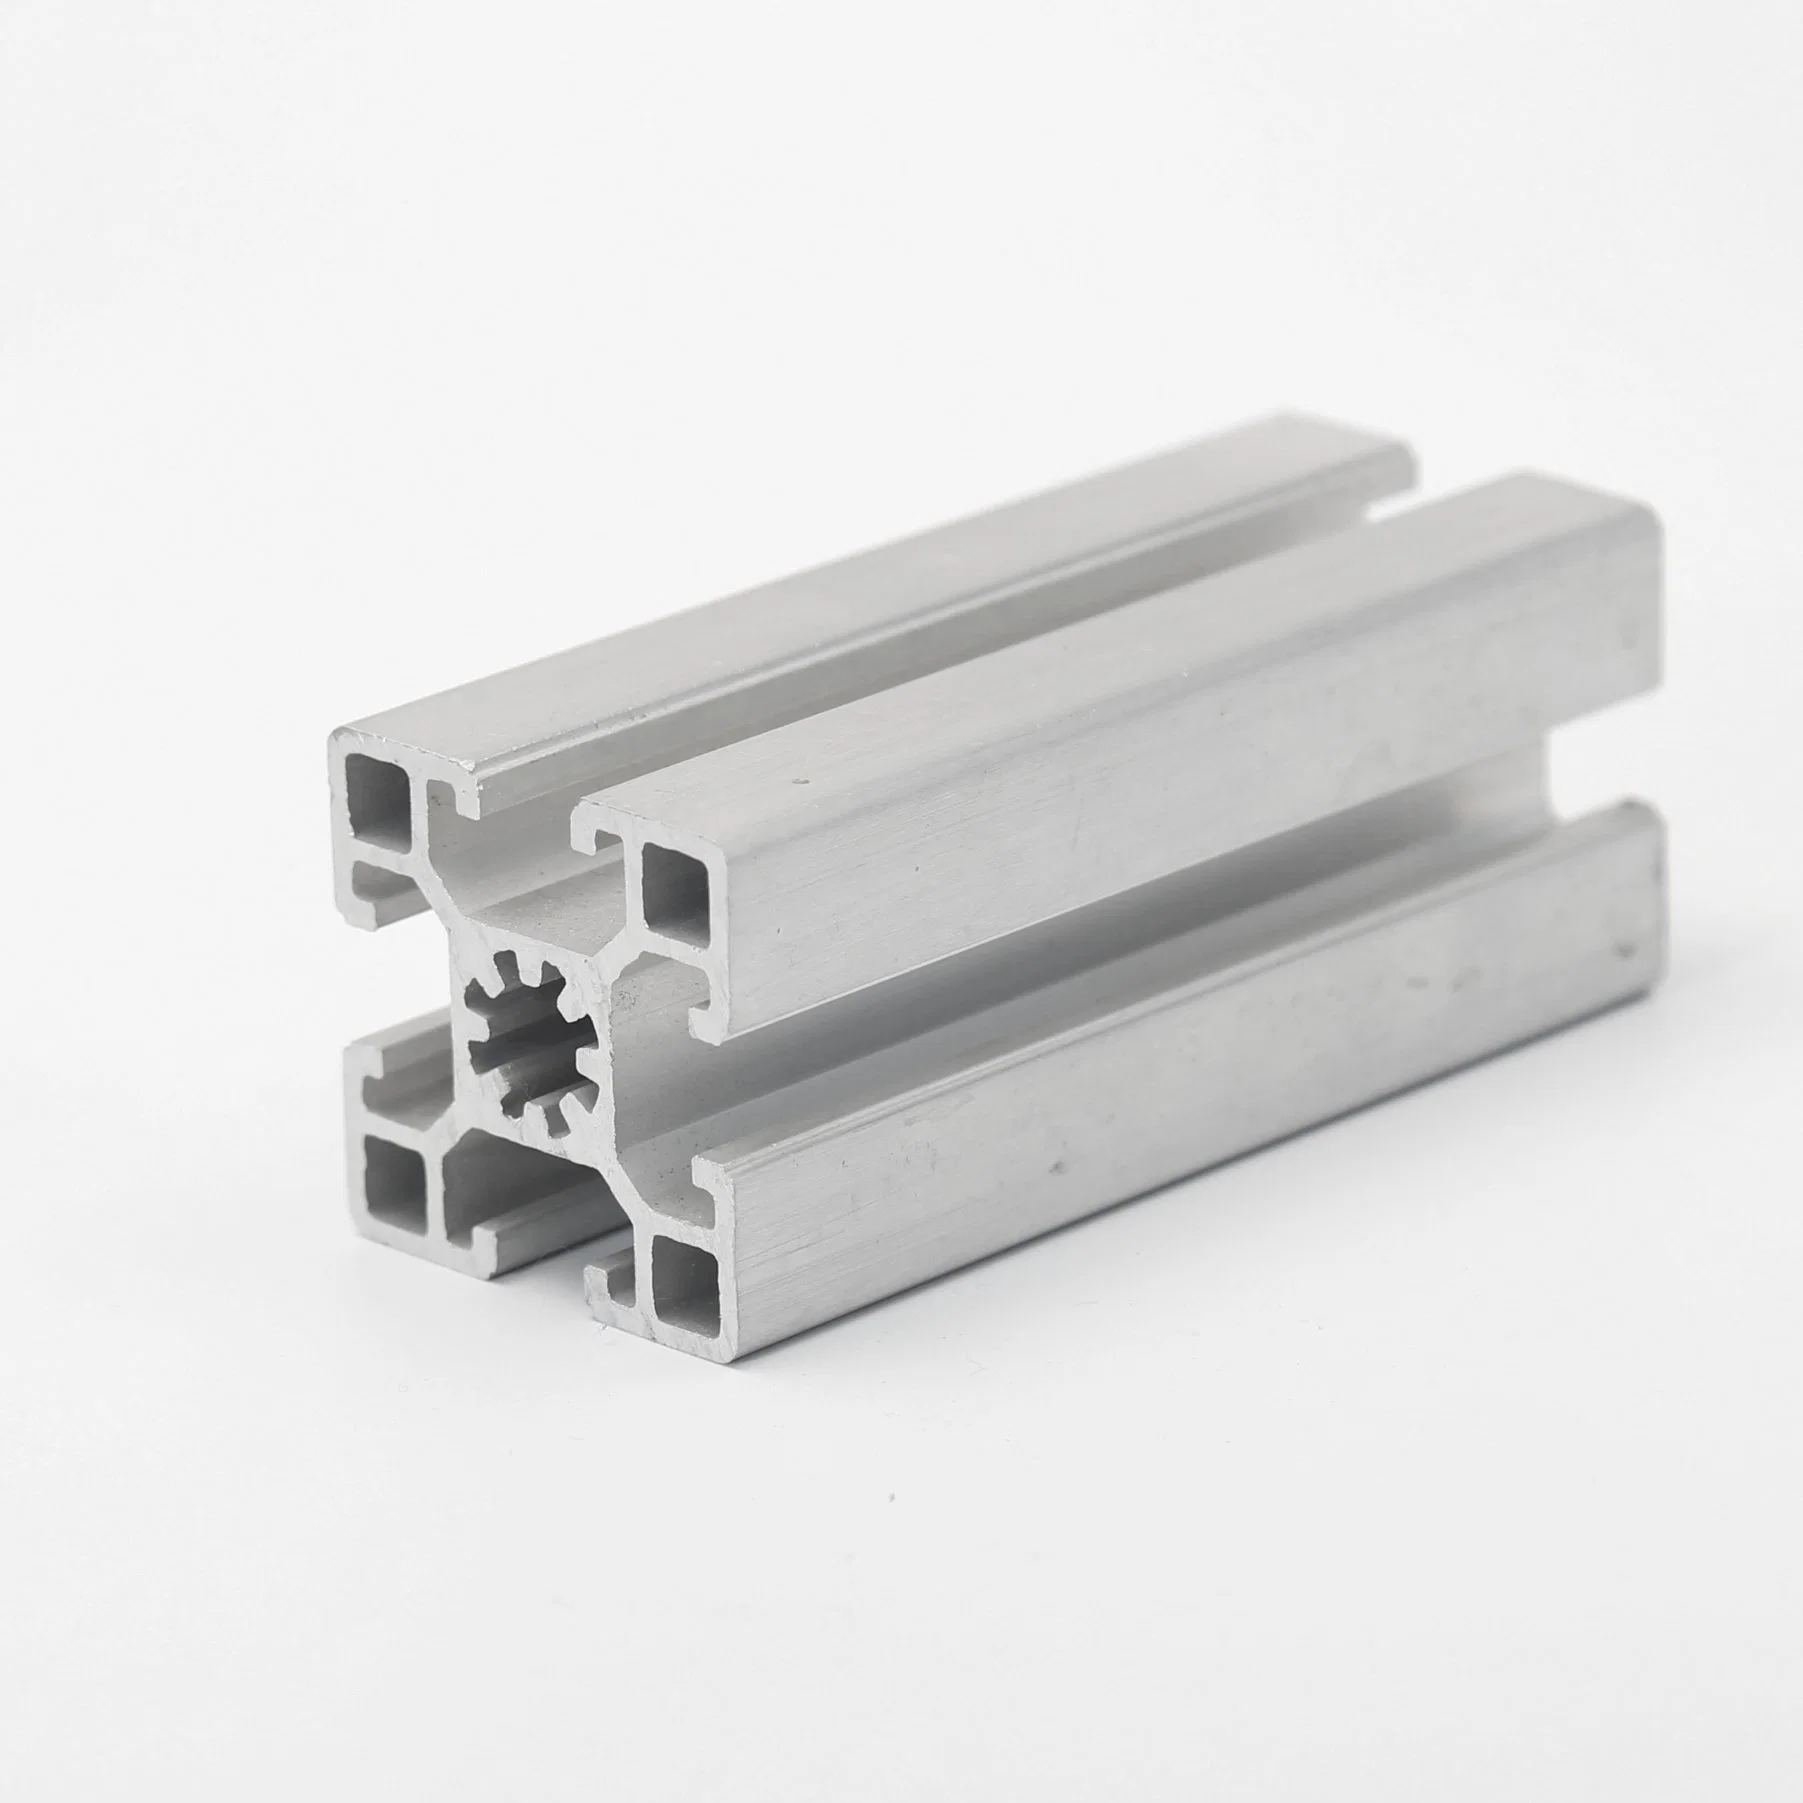 Andized Silvery Standard 6063 T5 Aluminium Extrusion T Slotted Aluminum Profiles